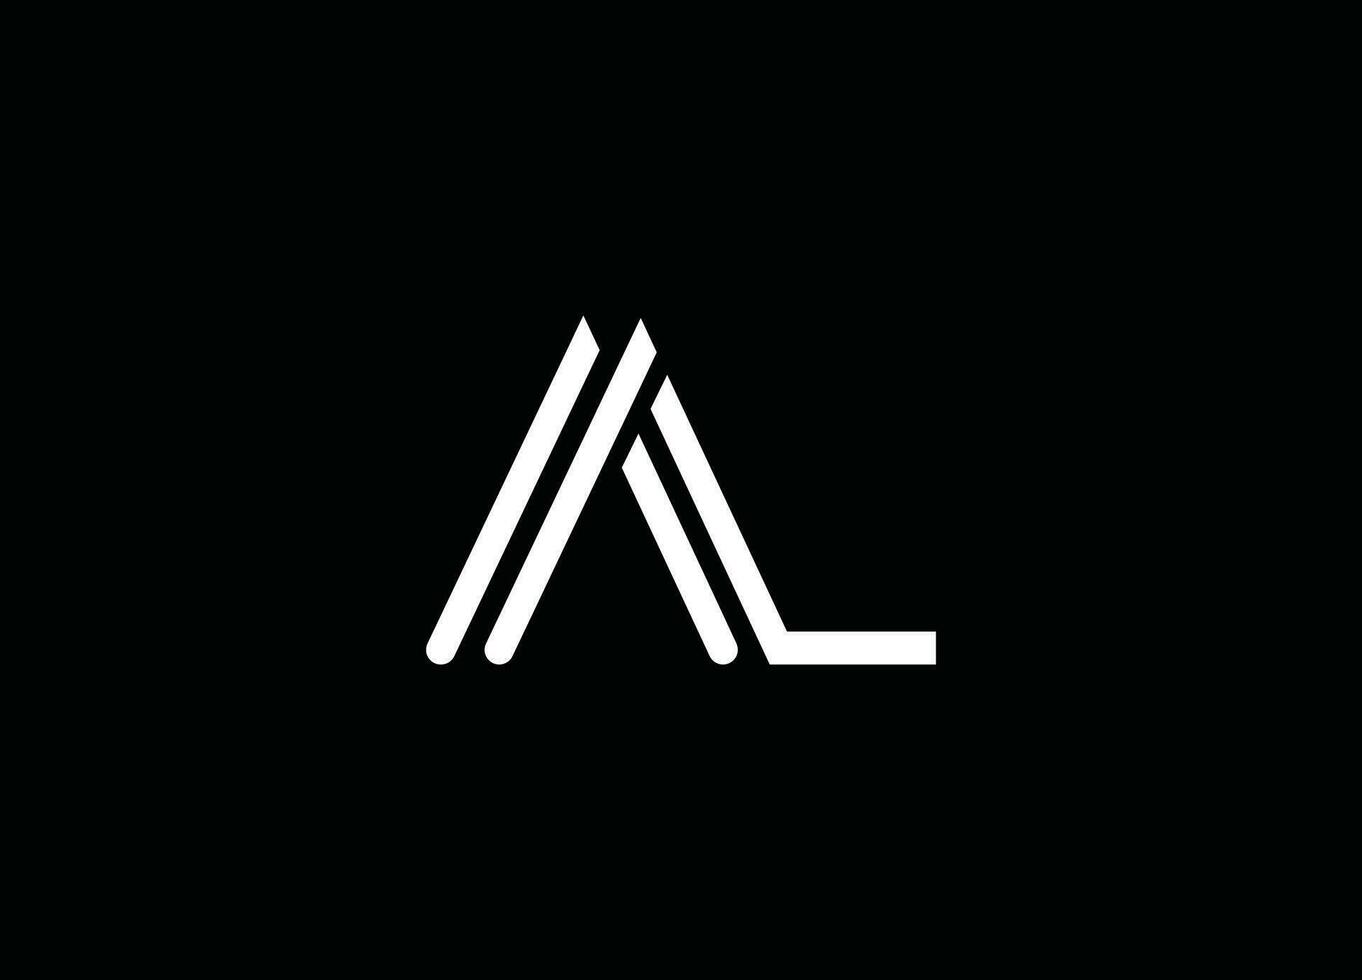 AL logo, la logo, al letter logo,  AL monogram logo, AL lainitials logo vector